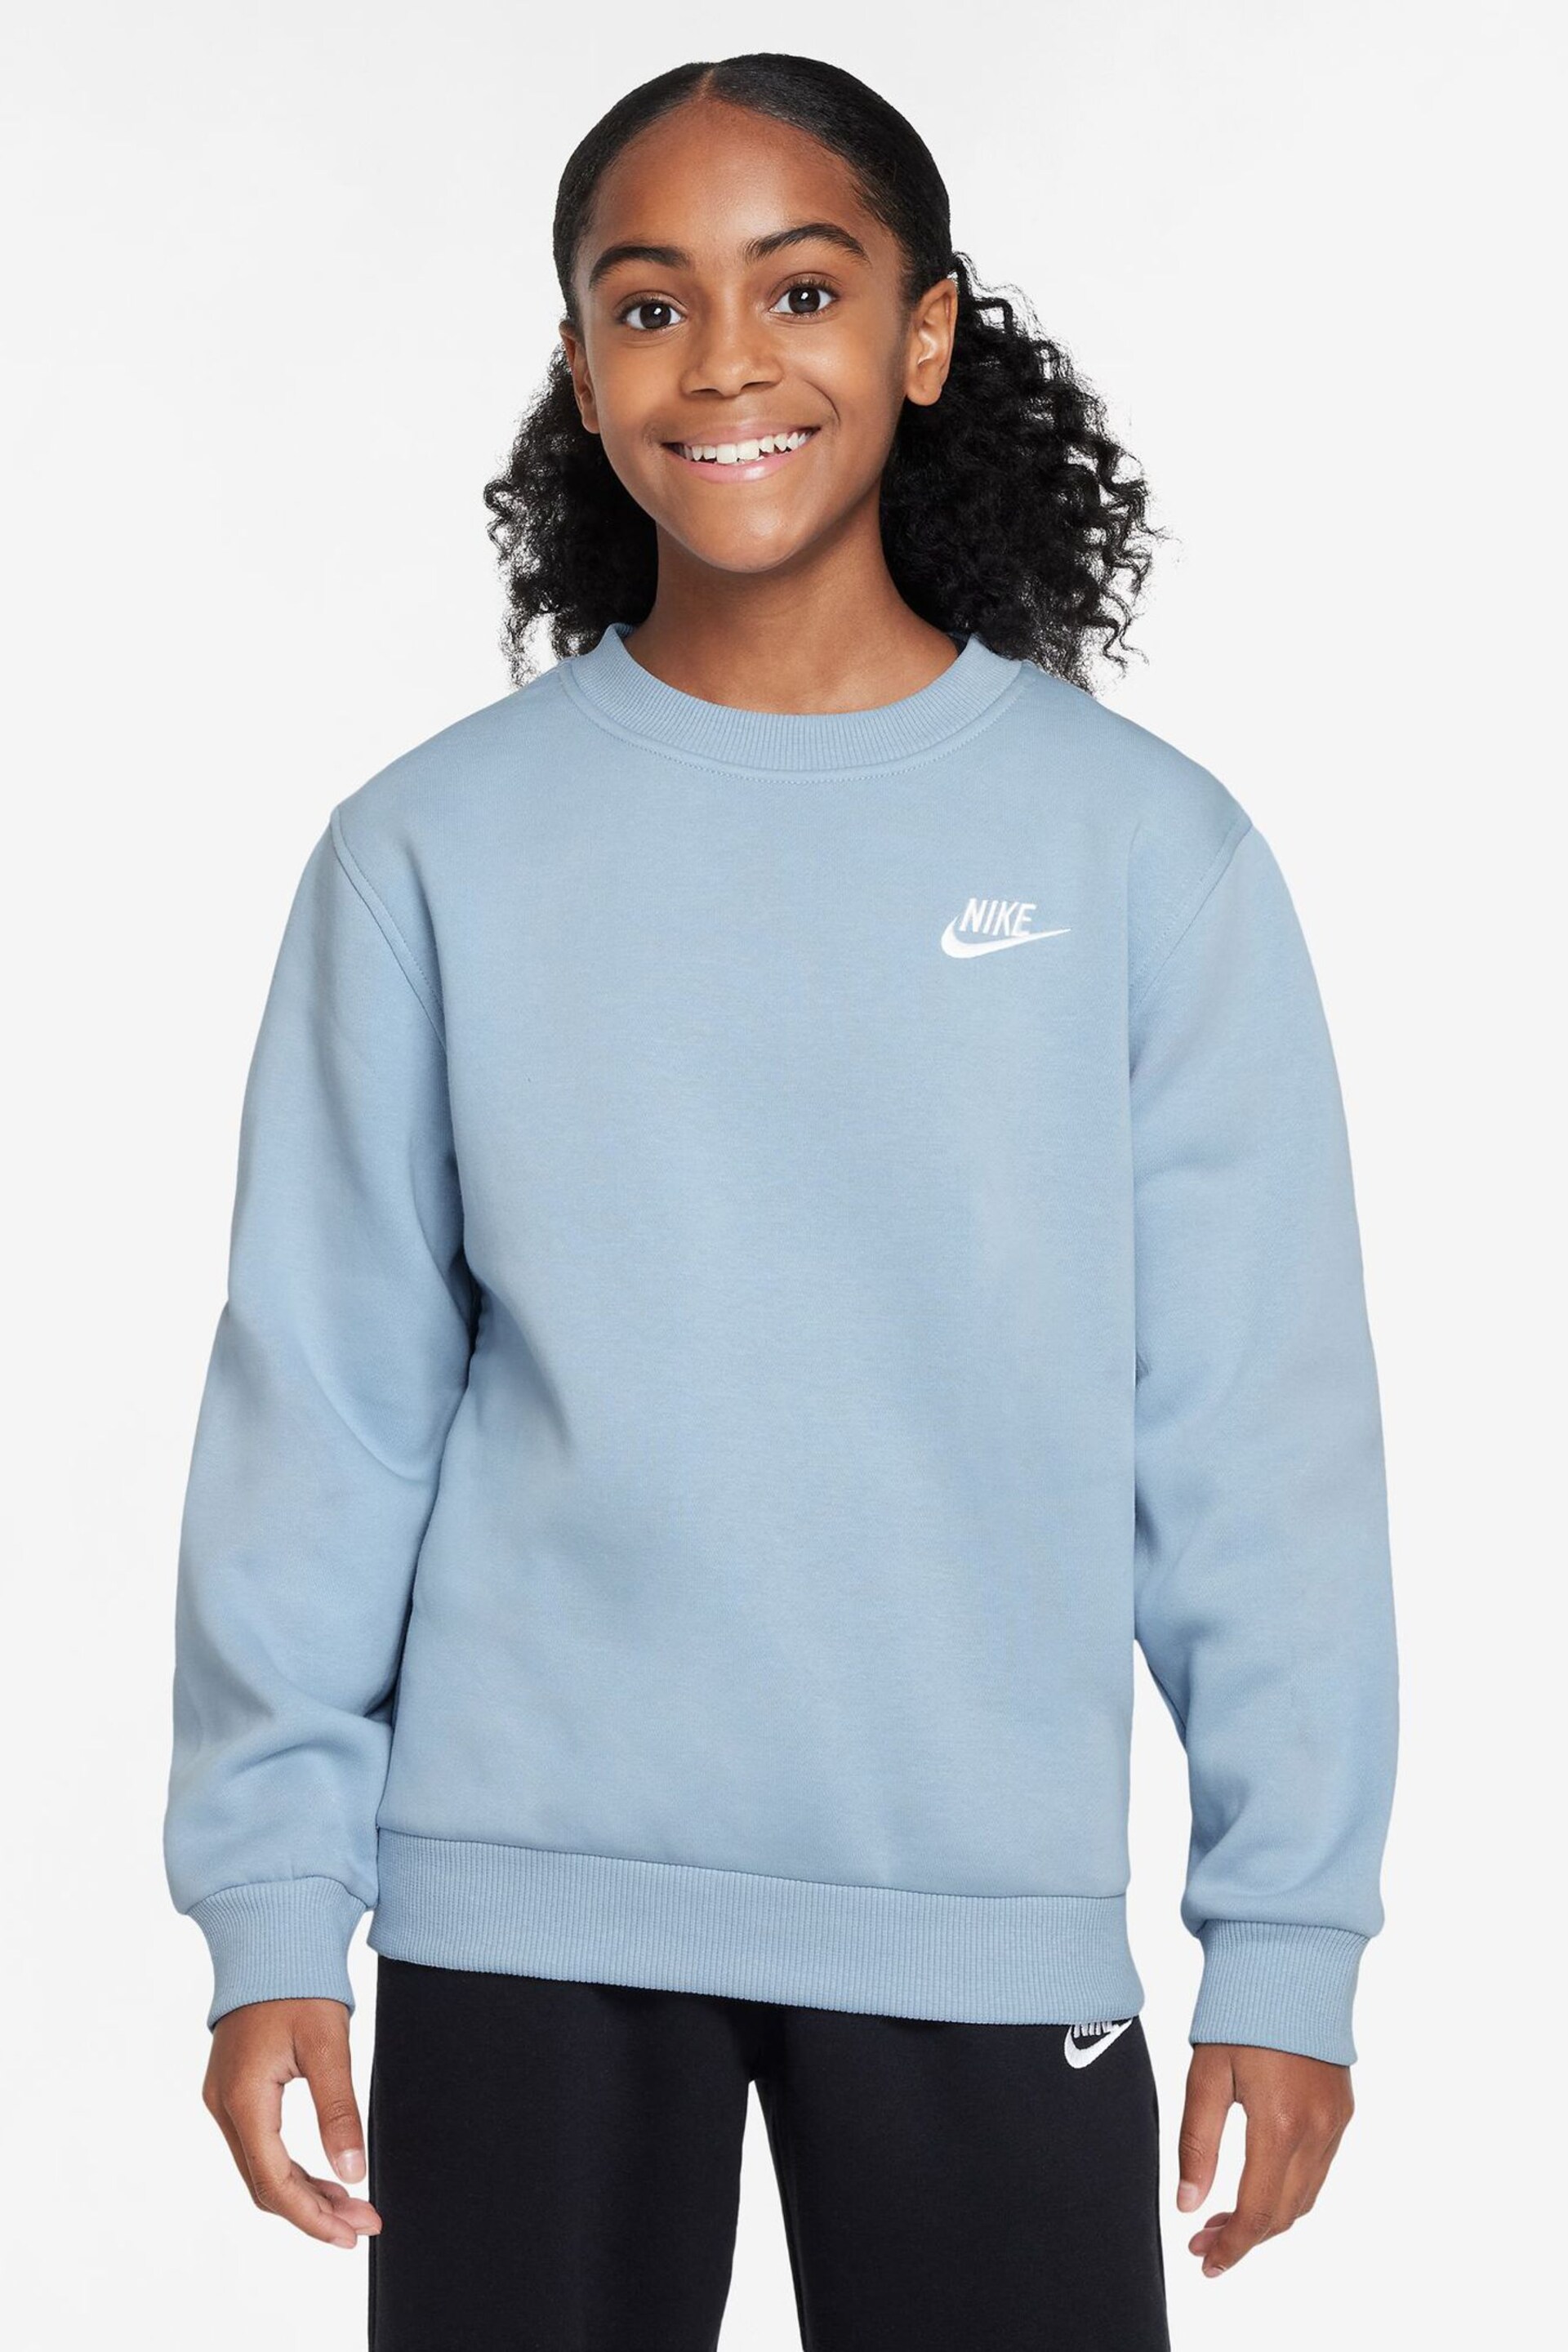 Nike Pale Blue Club Fleece Sweatshirt - Image 1 of 3